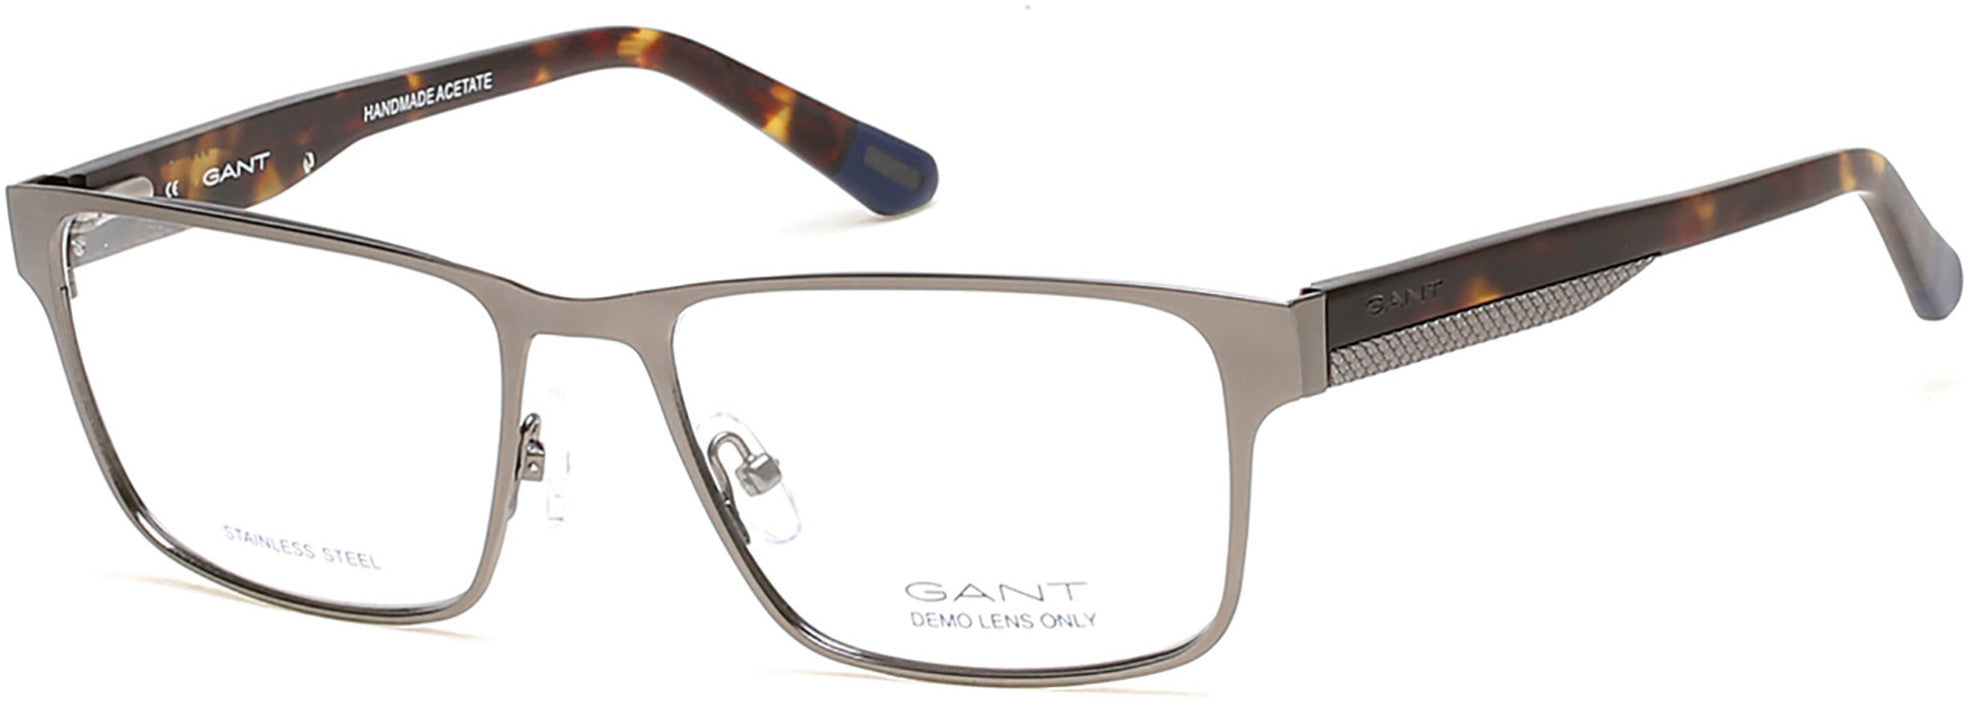 Gant GA3121 Geometric Eyeglasses 009-009 - Matte Gunmetal